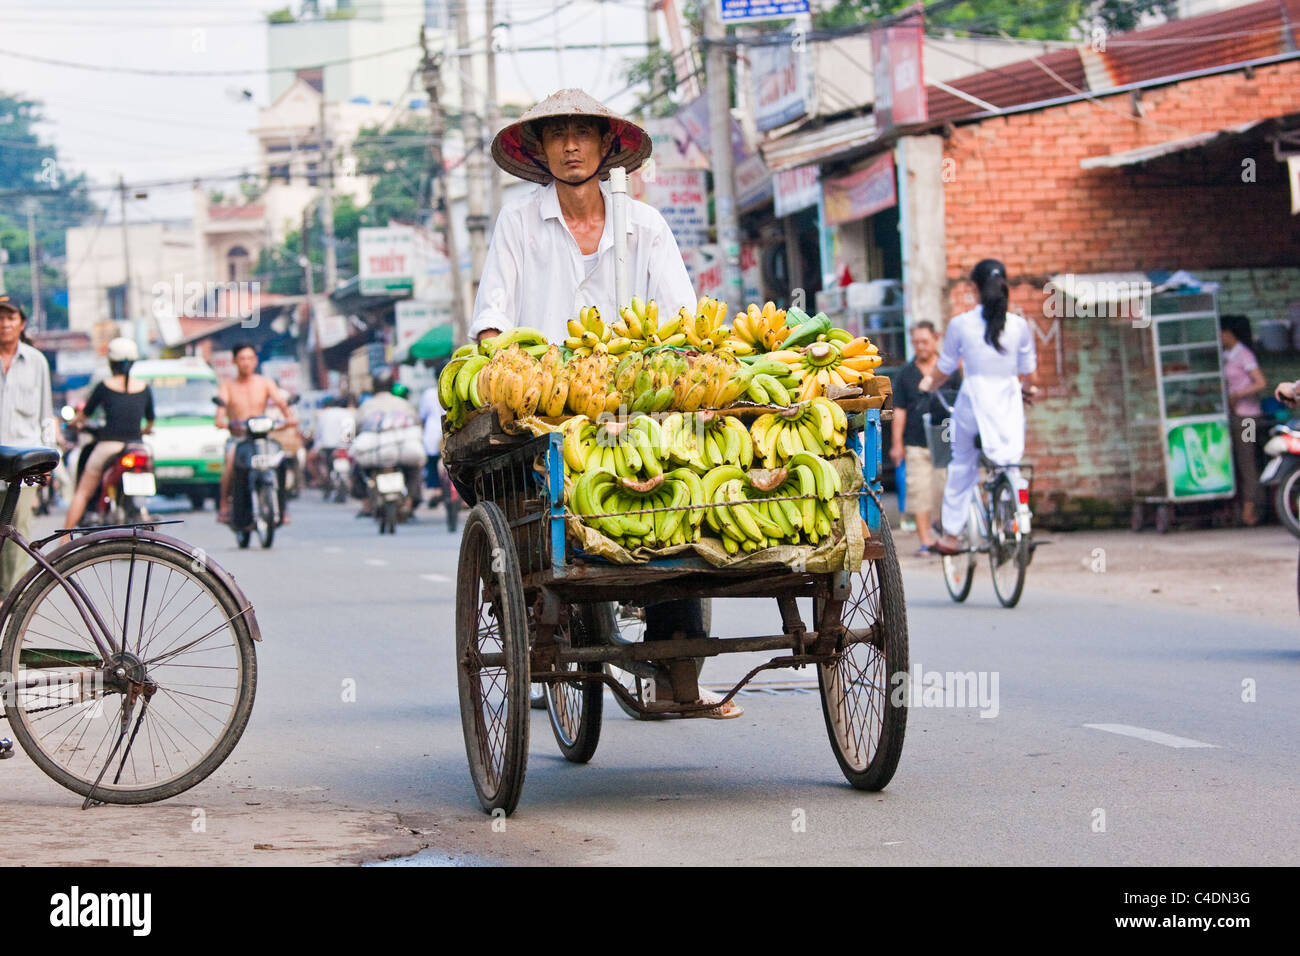 Street vendor selling Bananas Stock Photo